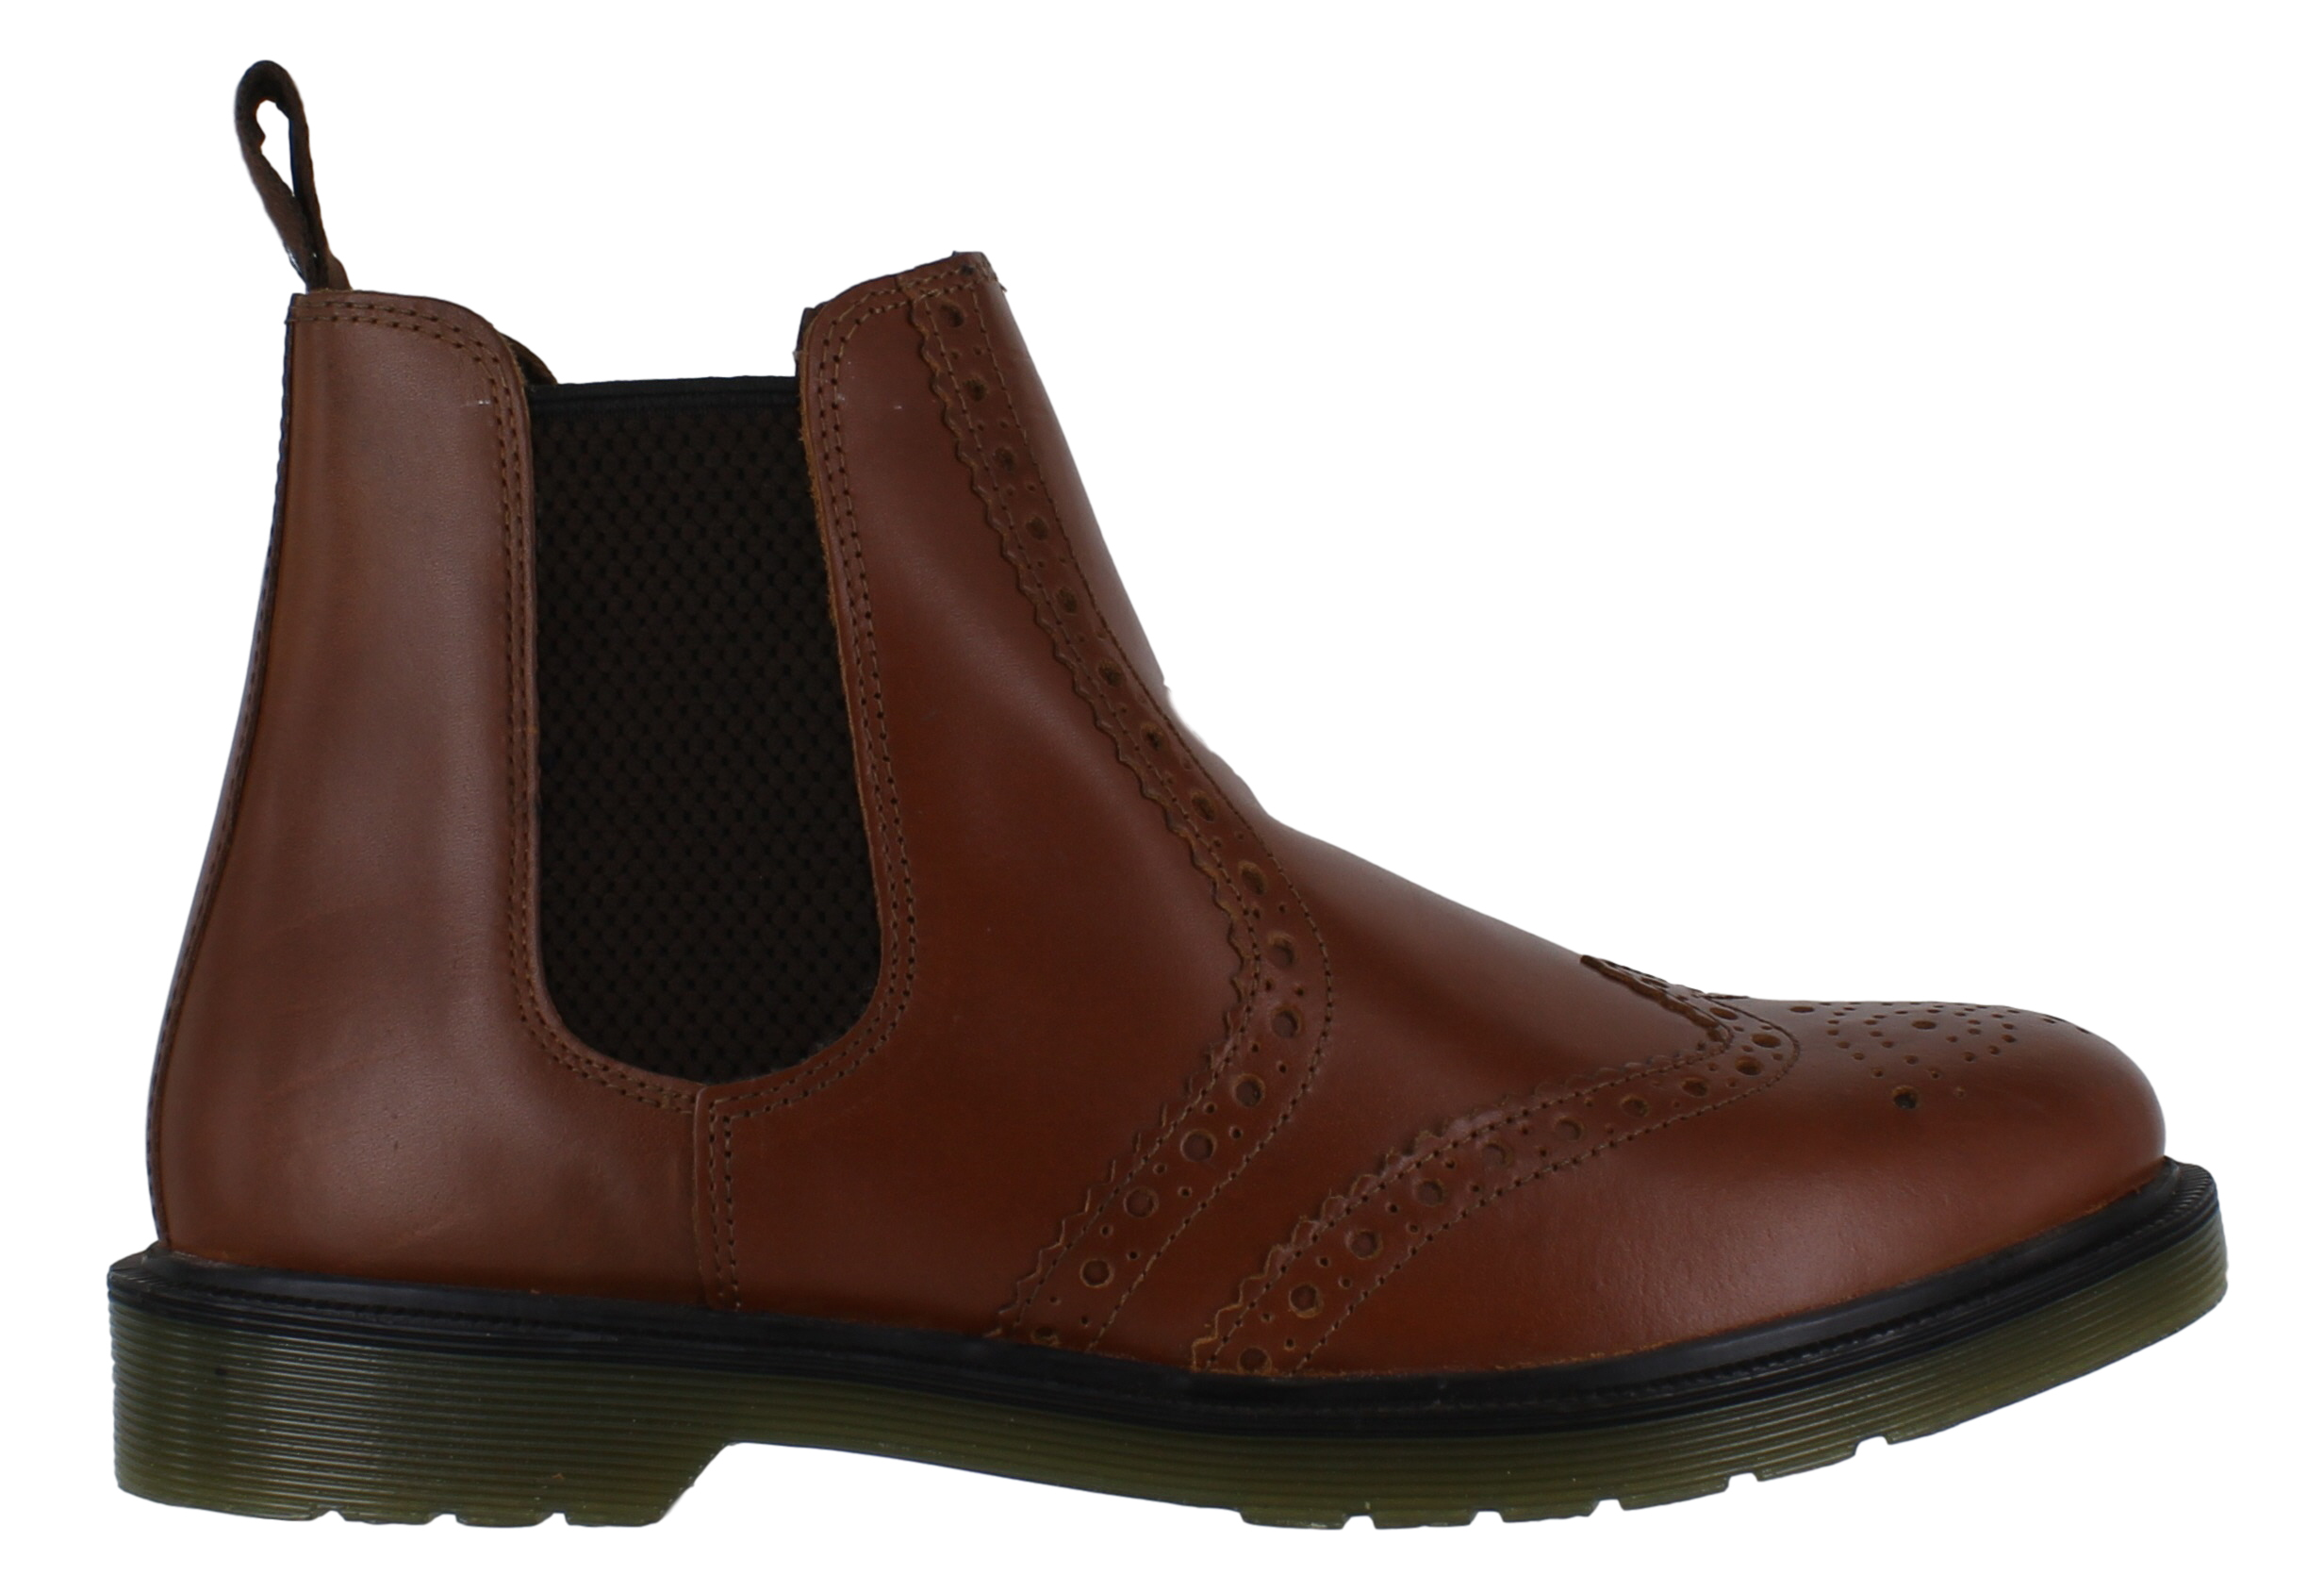 Hommes oaktrak belper cuir chelsea chaussures country slip on bottes tailles 6 à 12